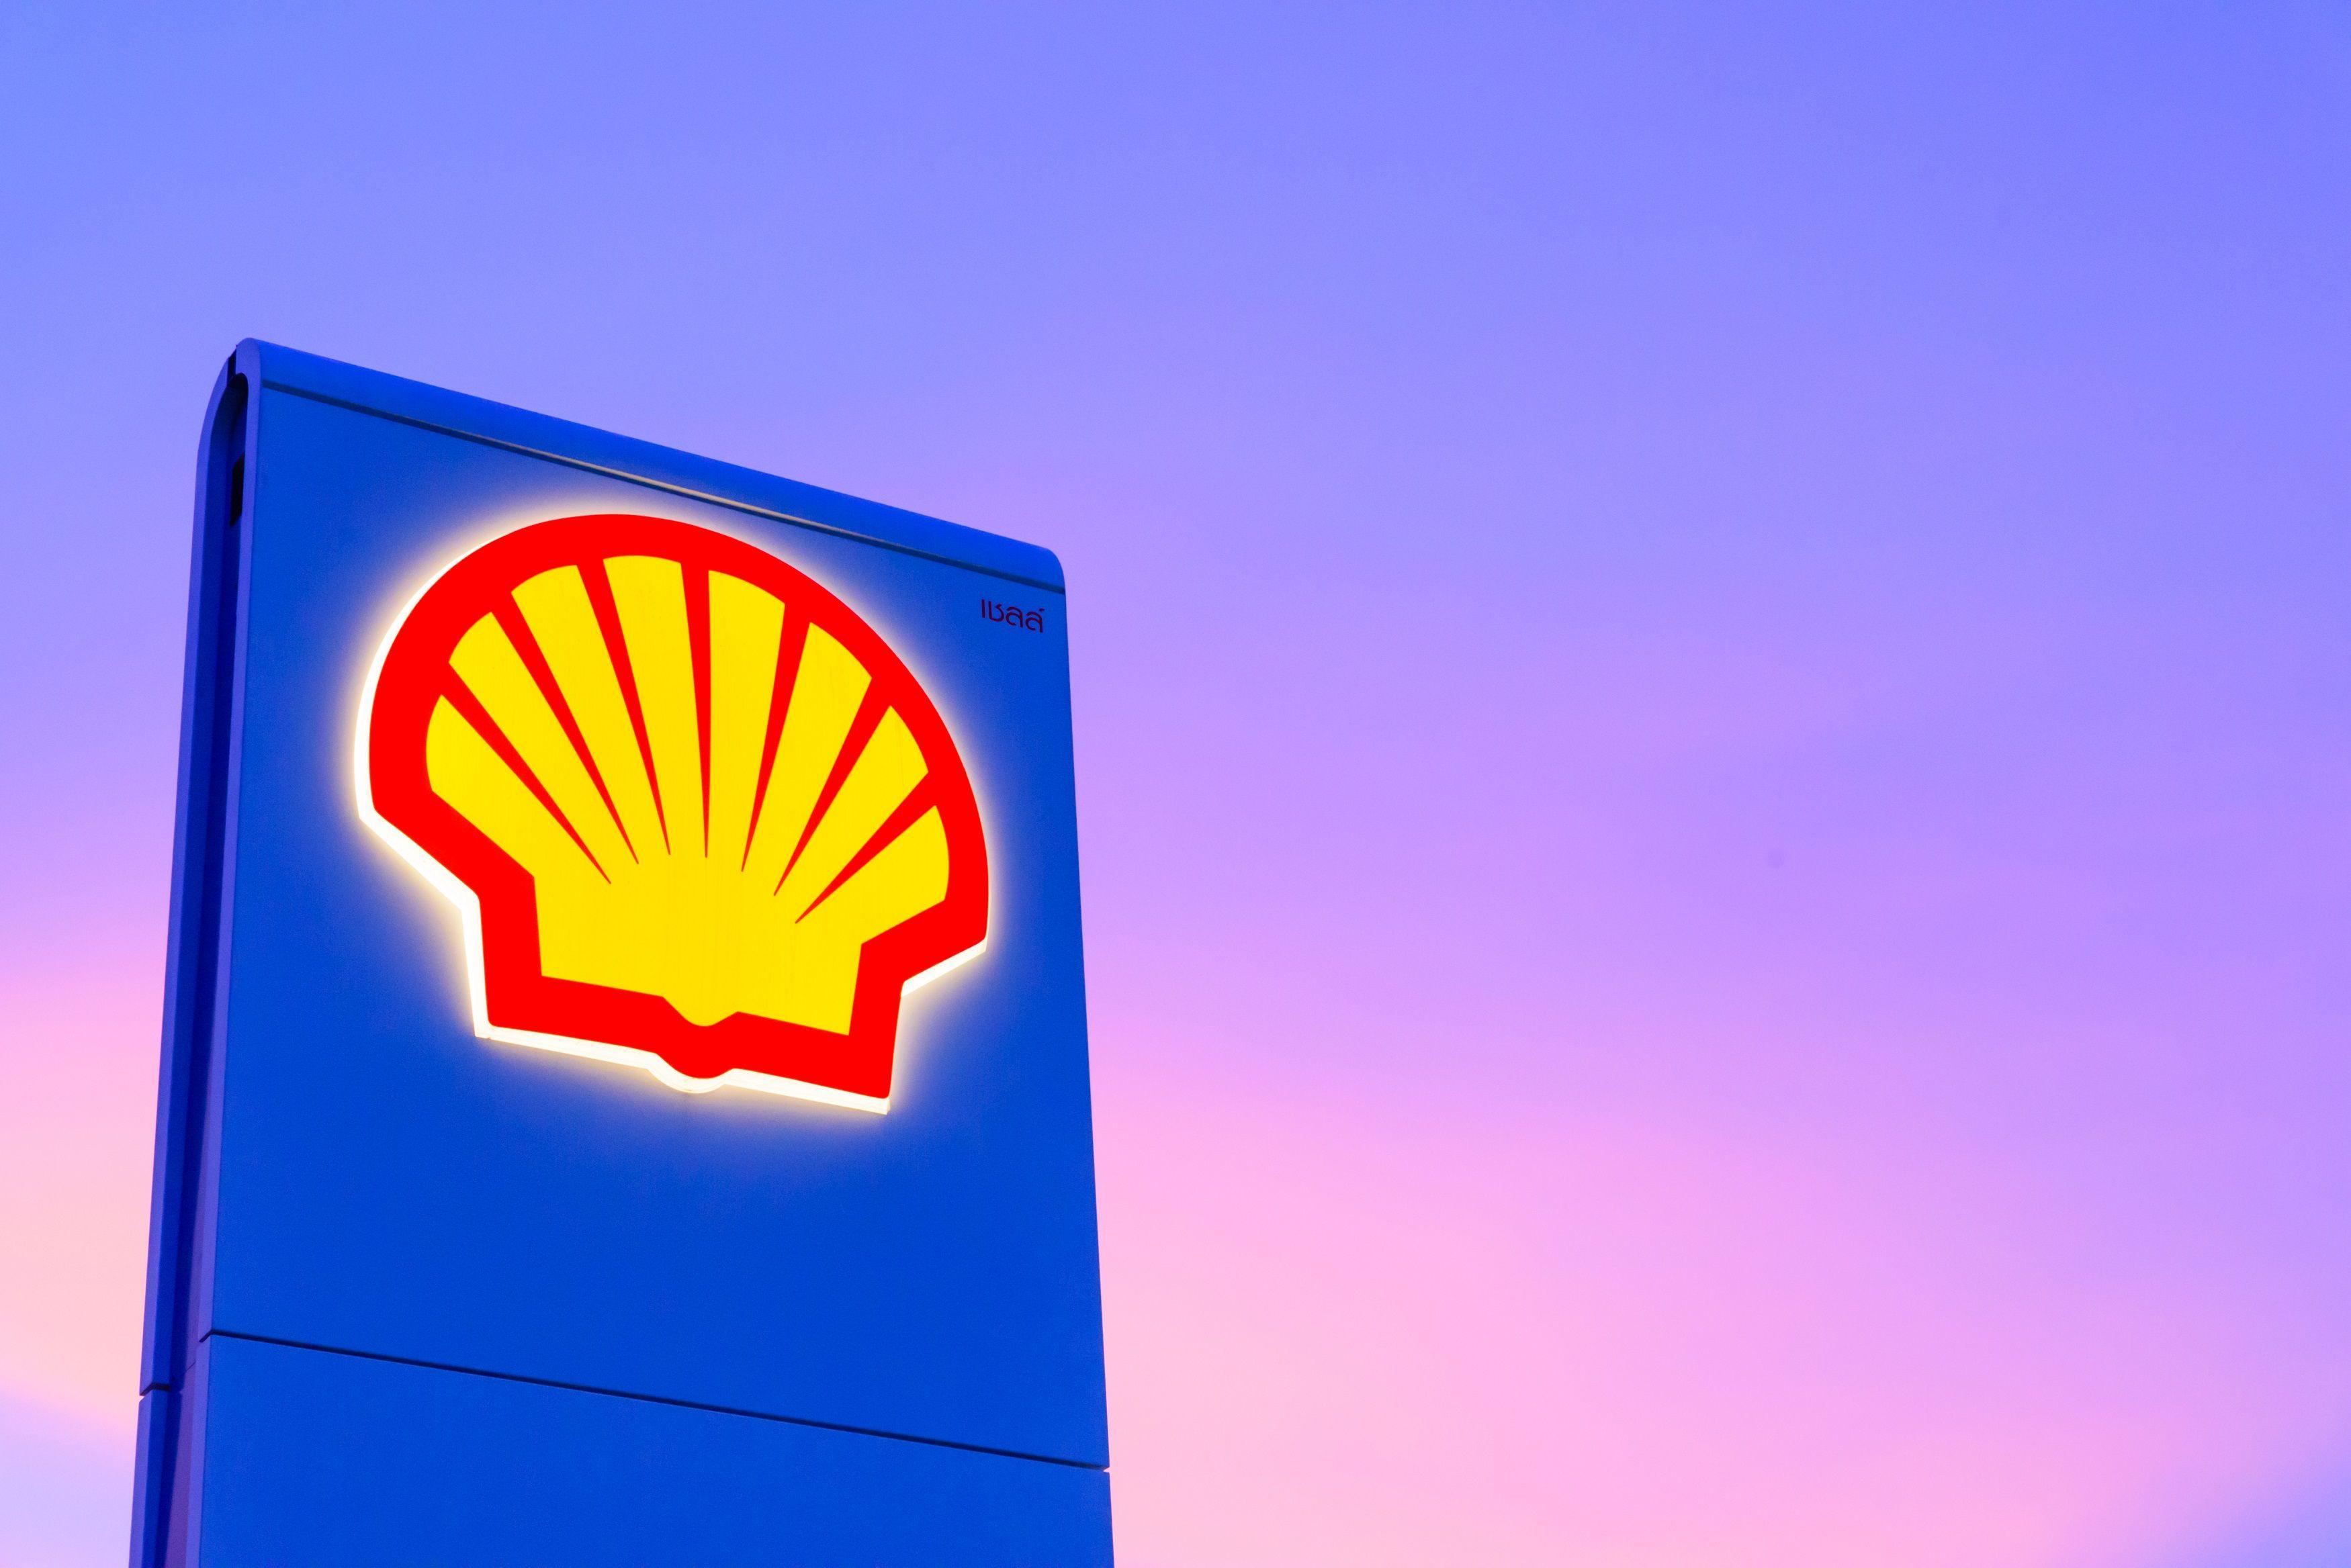 Shell Oil Company Logo - Top 10 Oil & Gas Companies: Royal Dutch Shell | Oil & Gas IQ